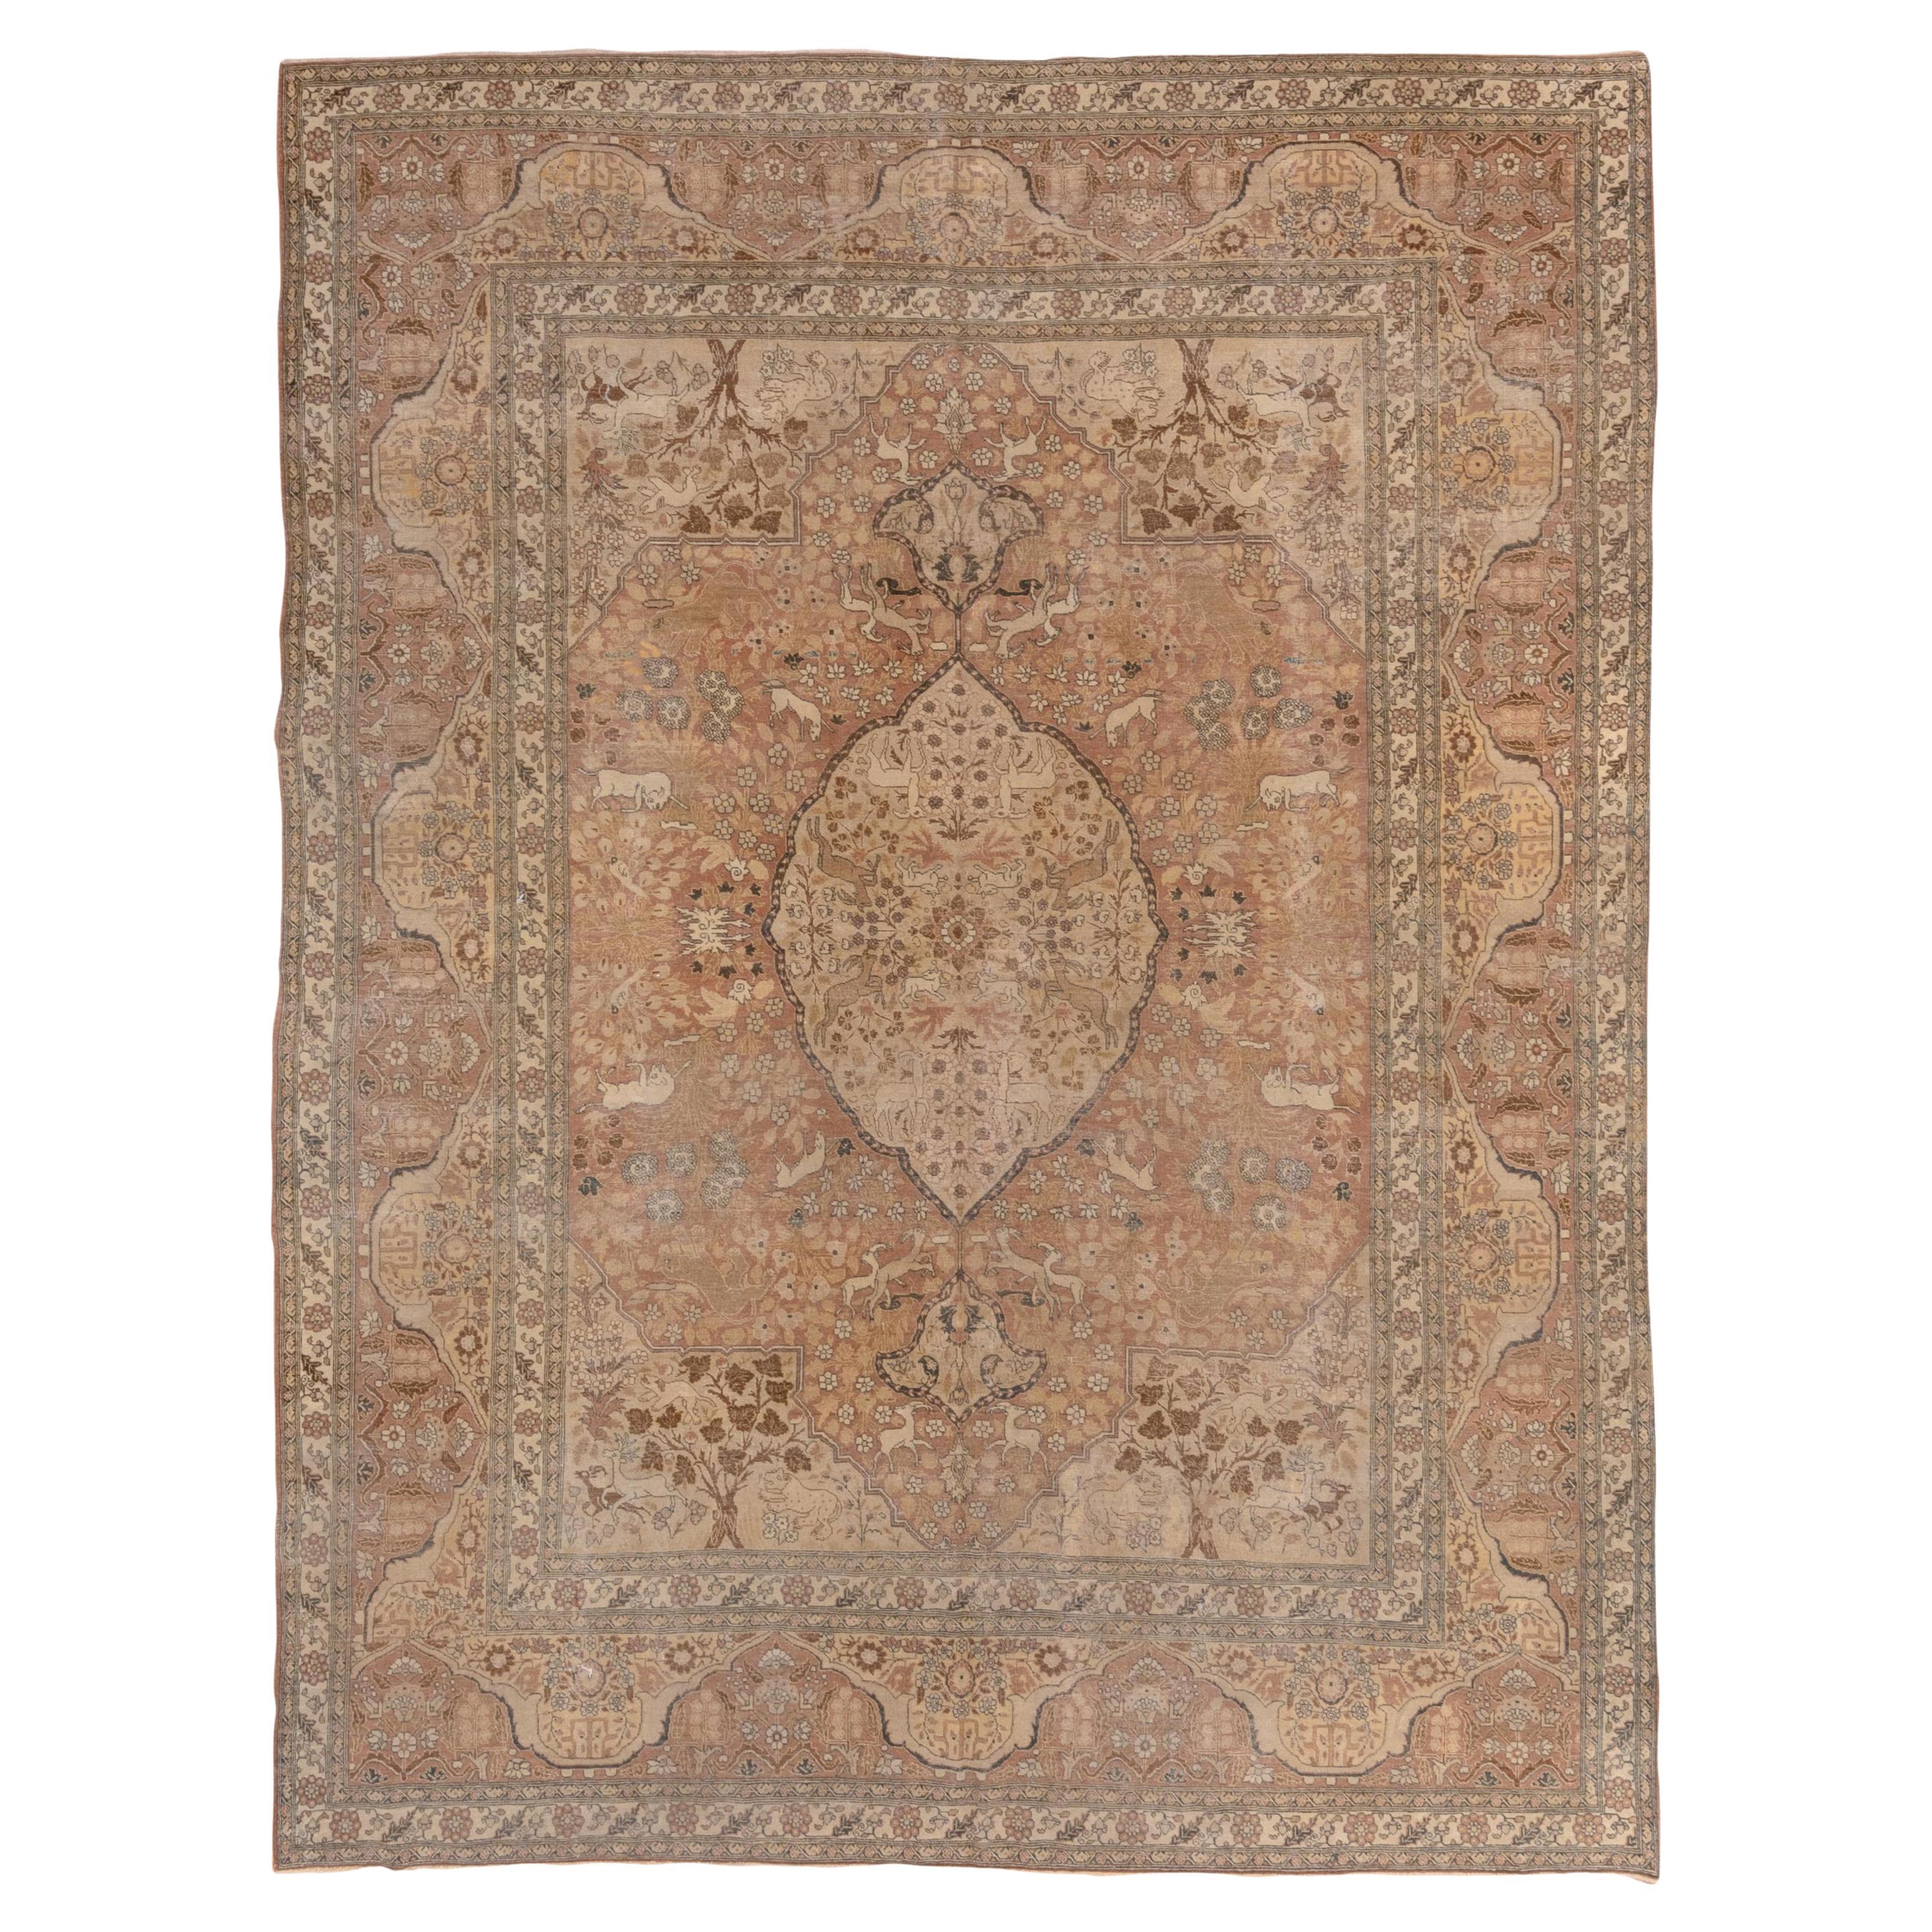 Antique Persian Tabriz Carpet, circa 1900s, Soft Palette